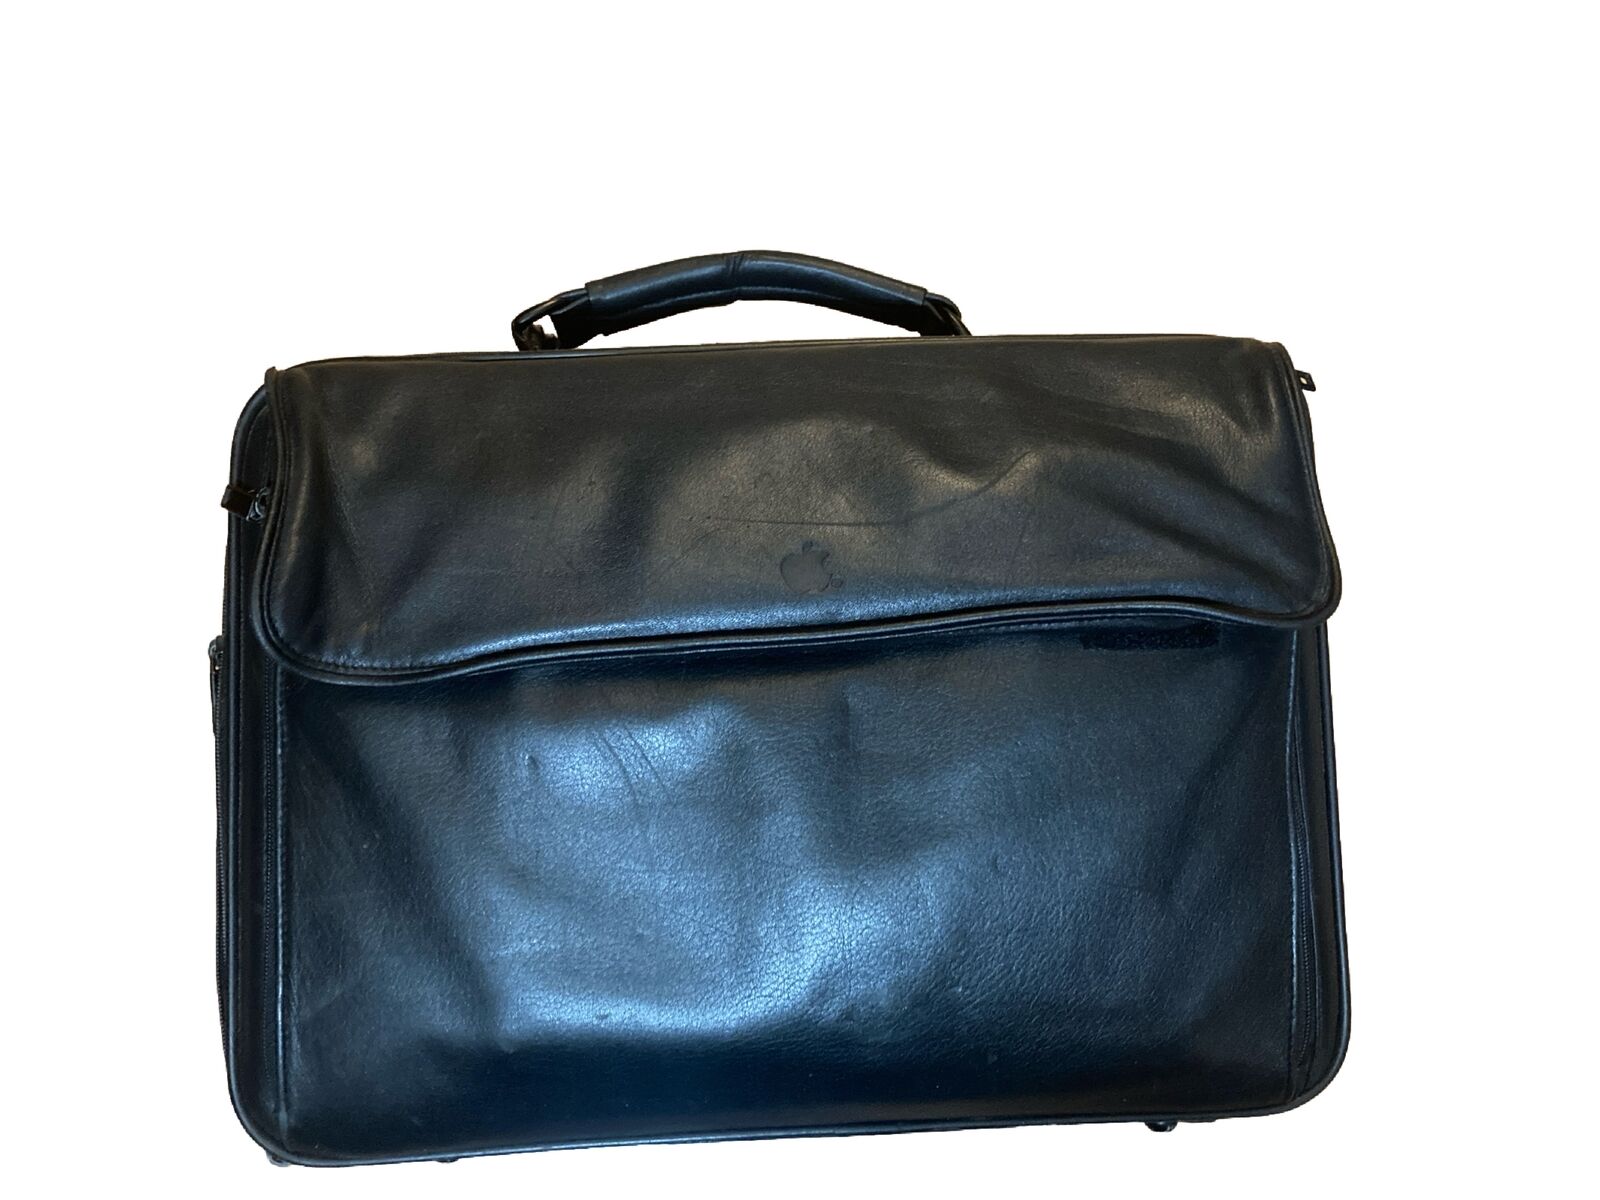 APPLE Macintosh LEATHER Computer Carry Bag/Case RARE VINTAGE